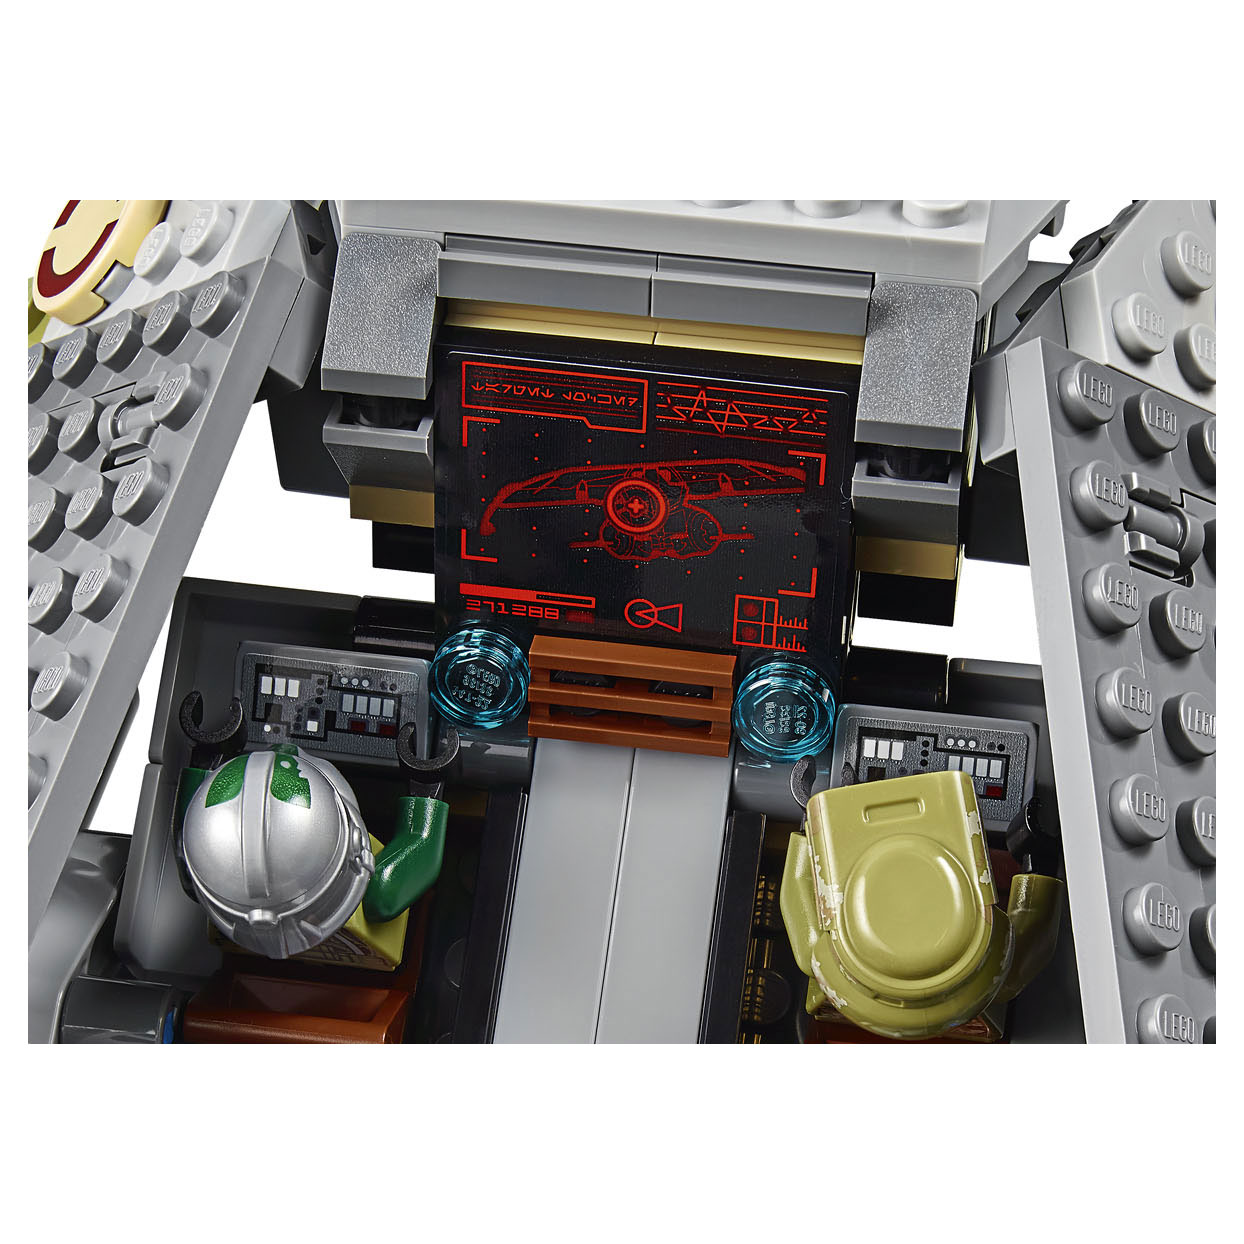 LEGO Star Wars 75234  AT-AP Walker